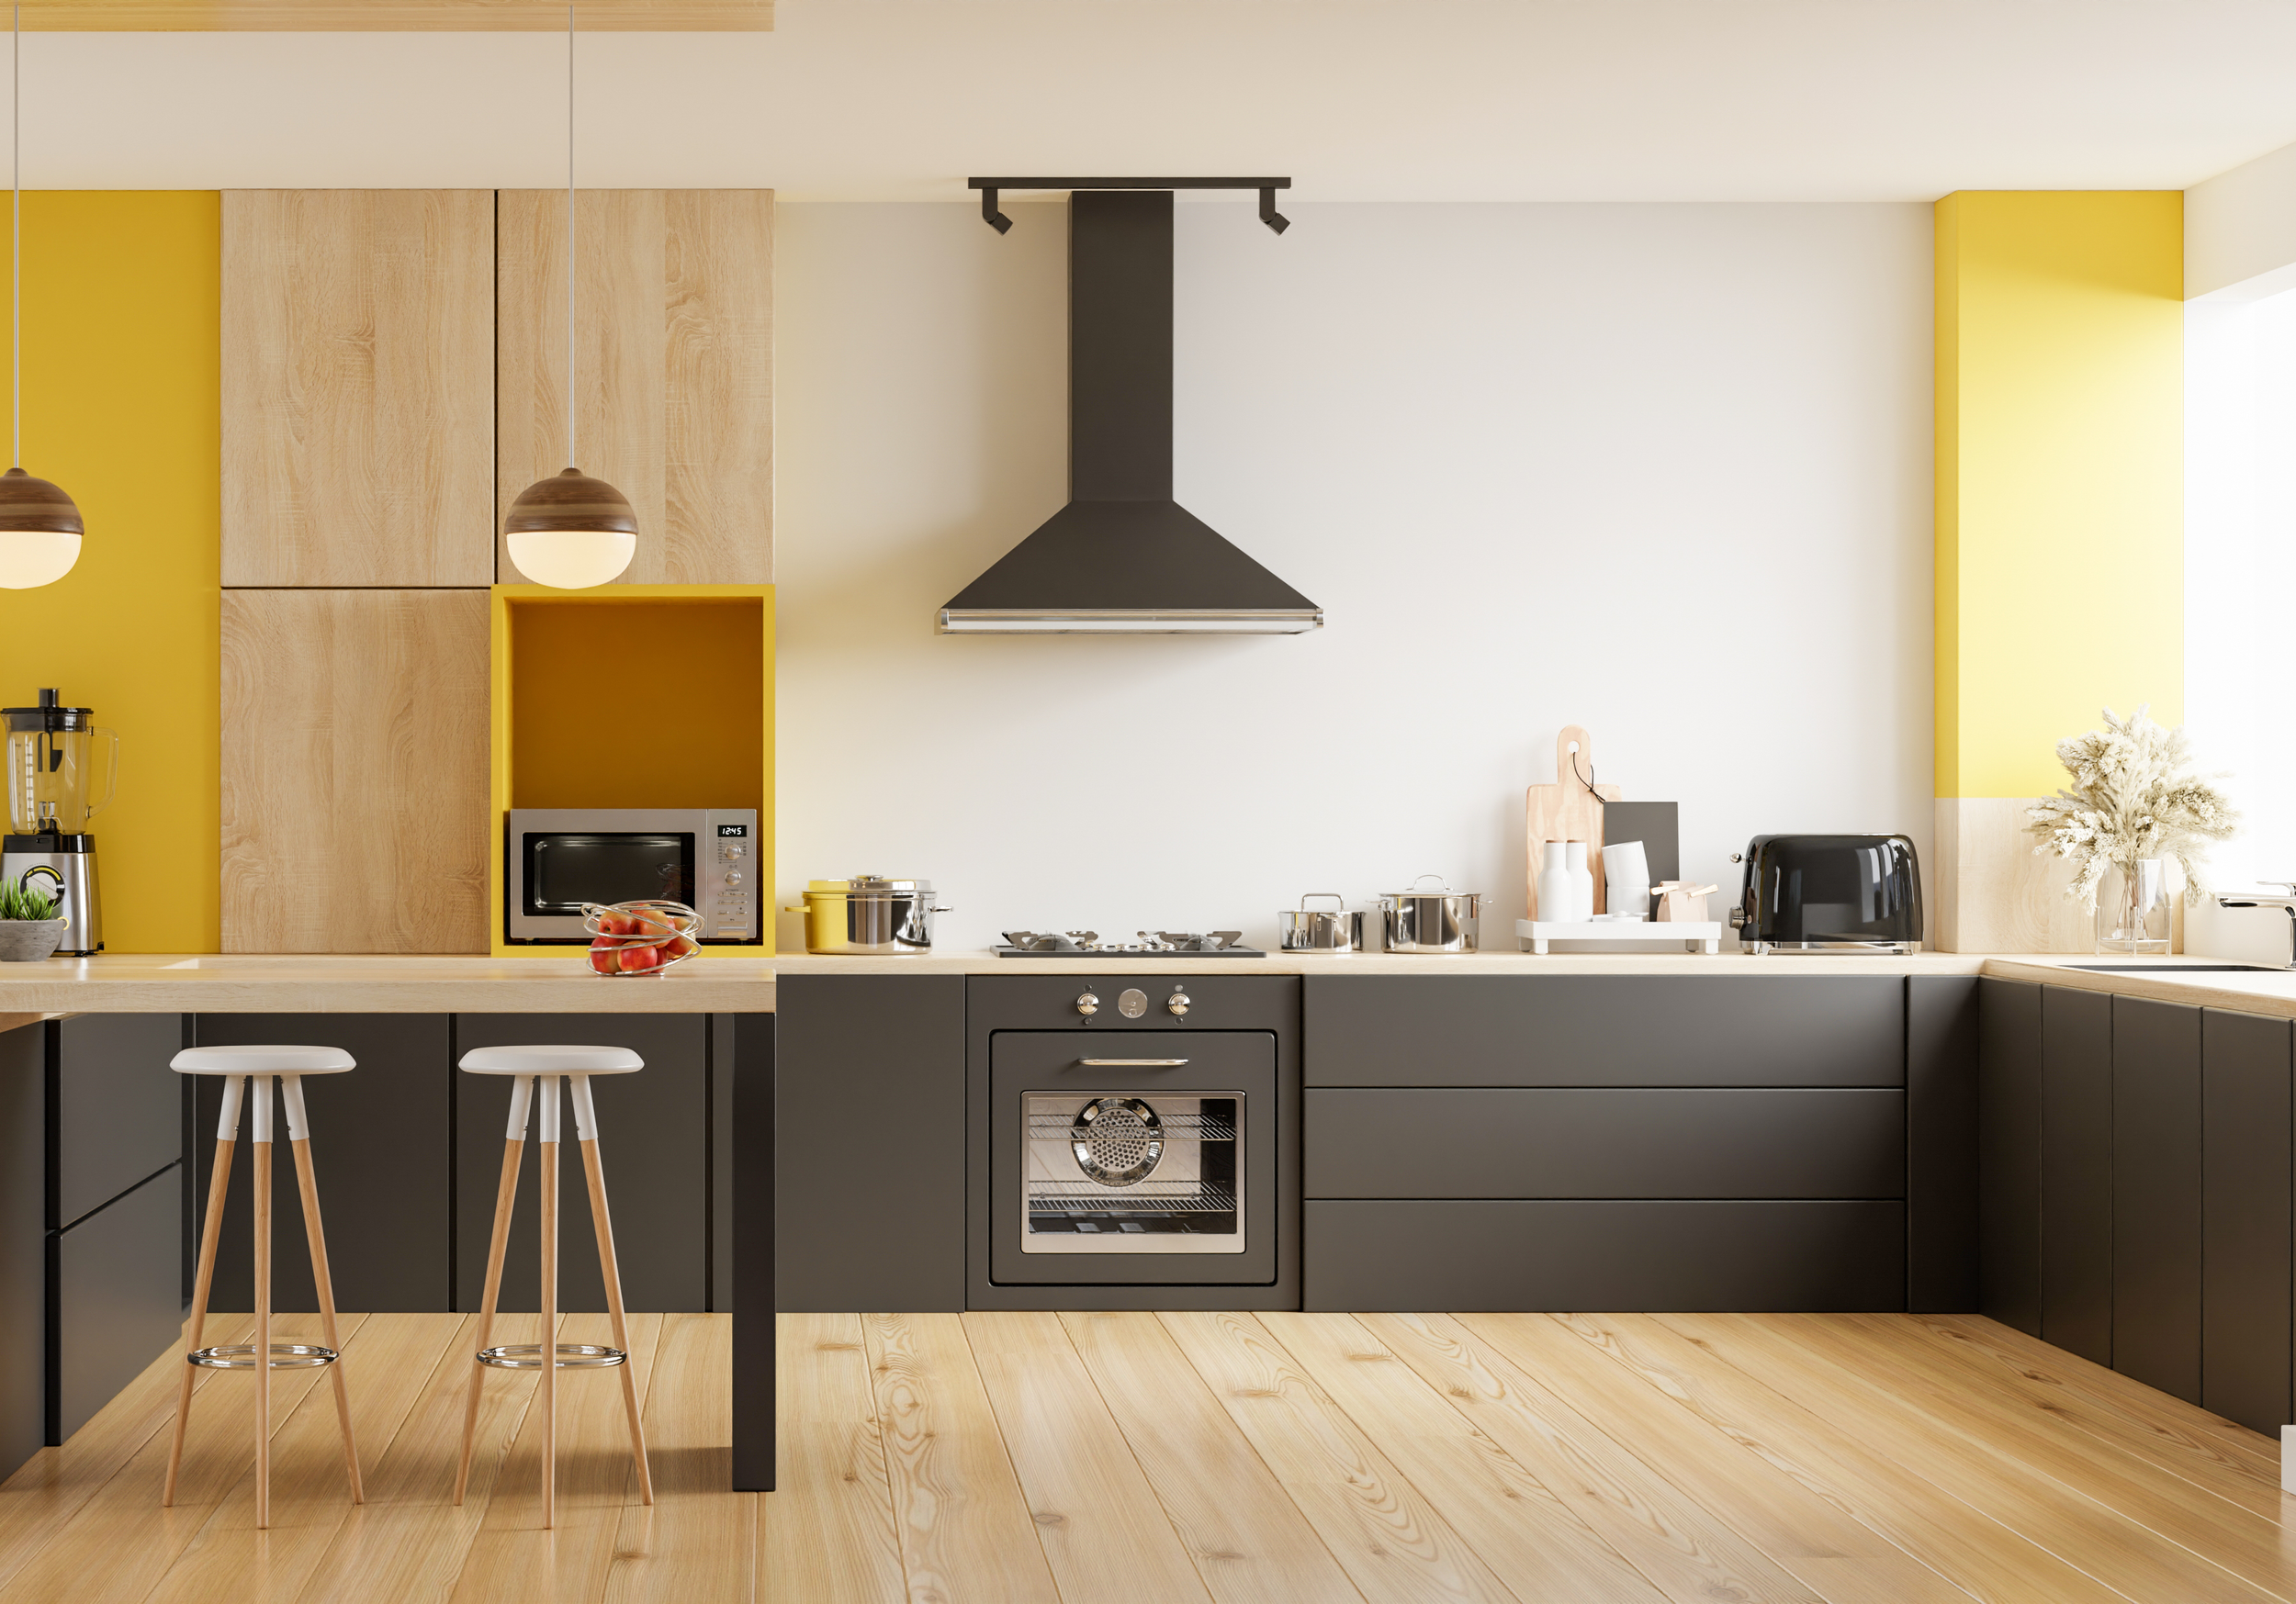 modern-kitchen-interior-with-furniture-stylish-kit-2022-12-16-12-00-05-utc.png